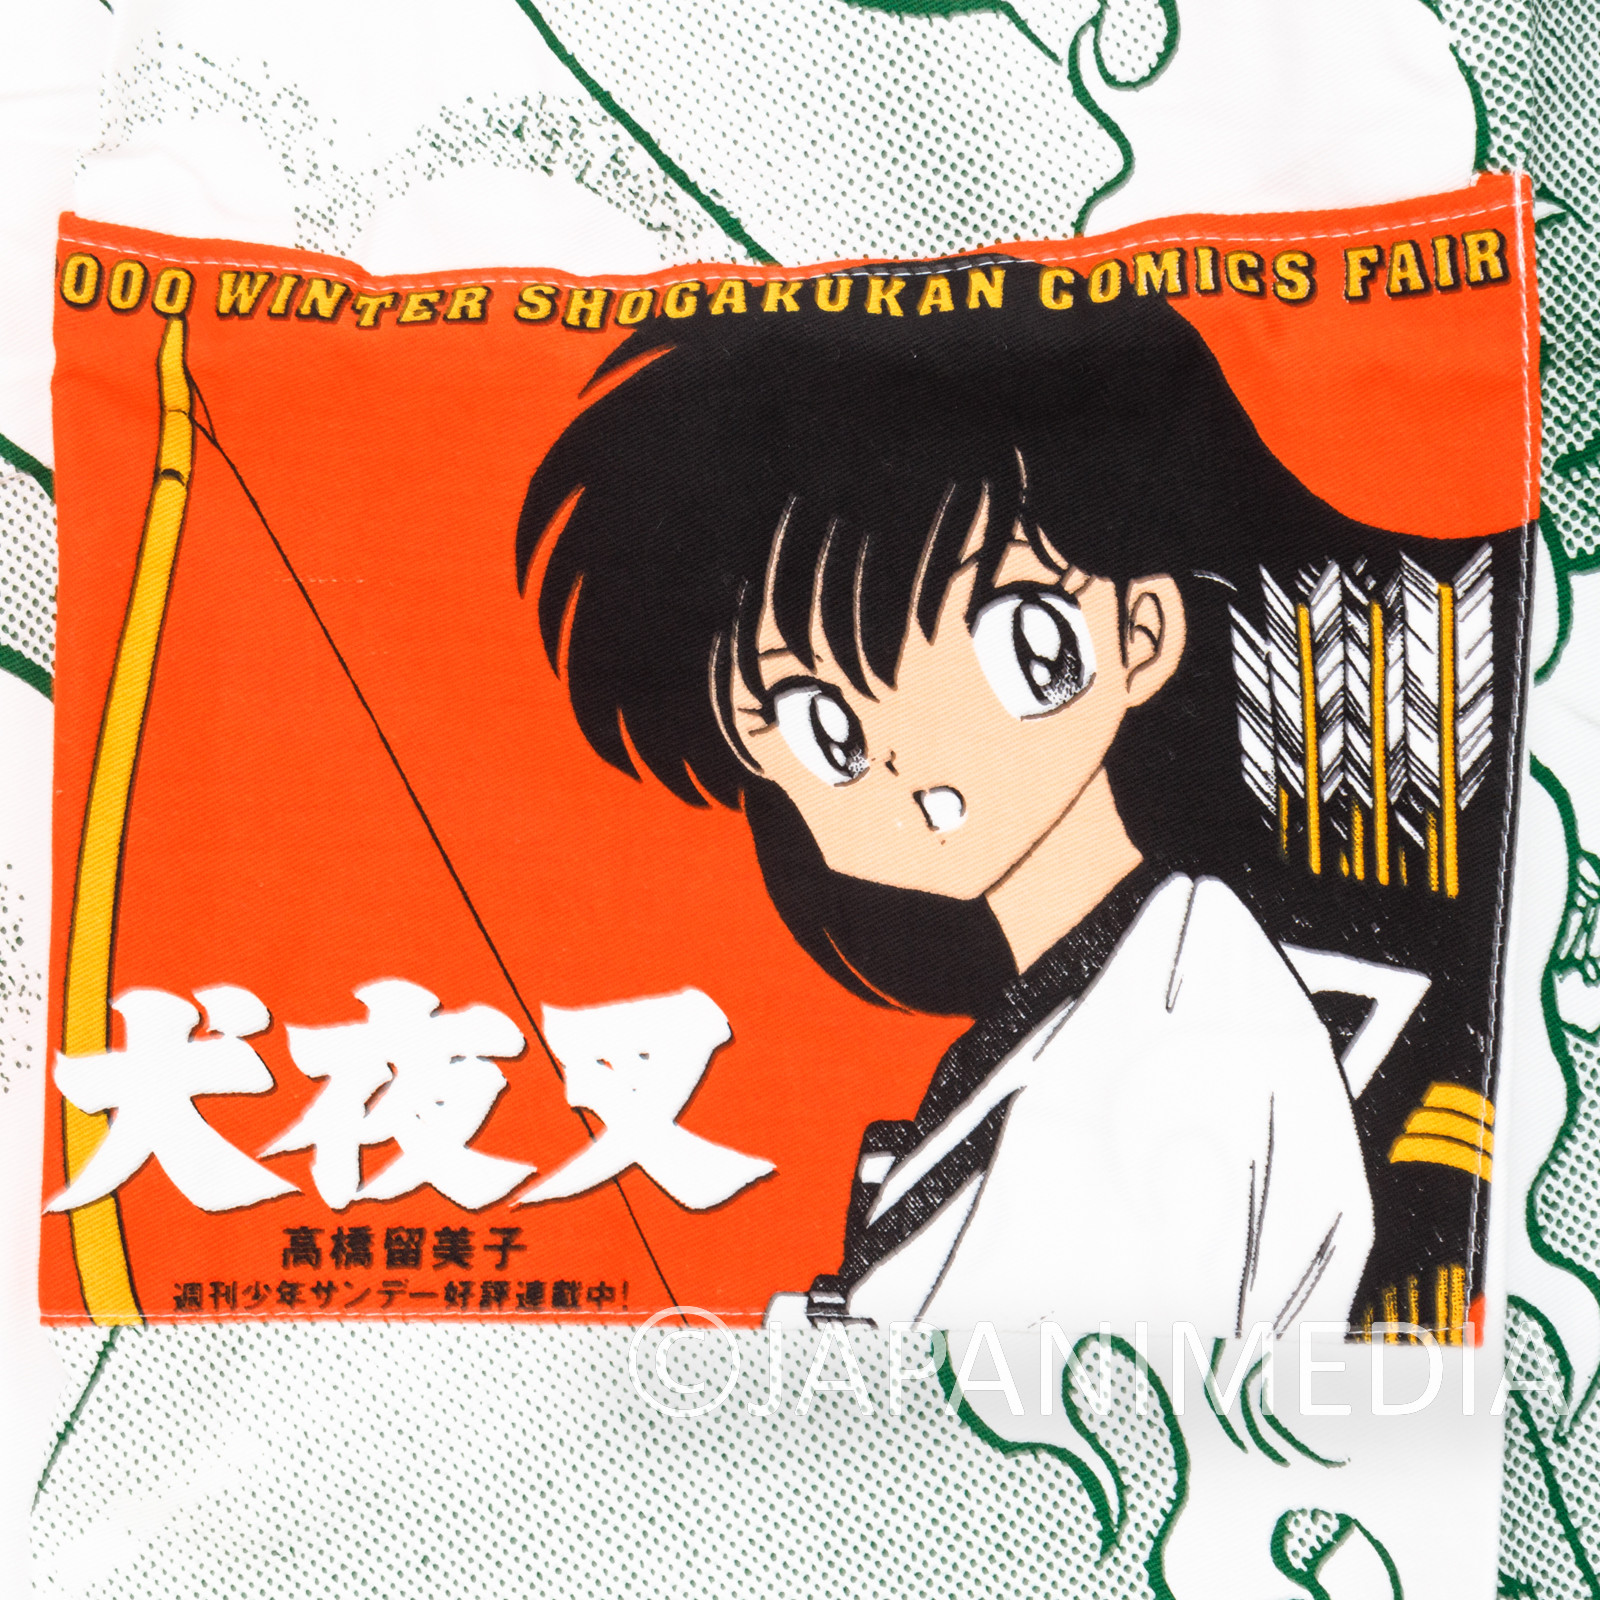 RARE! Inuyasha Apron / Shogakukan Comic Fair 2000 Limited